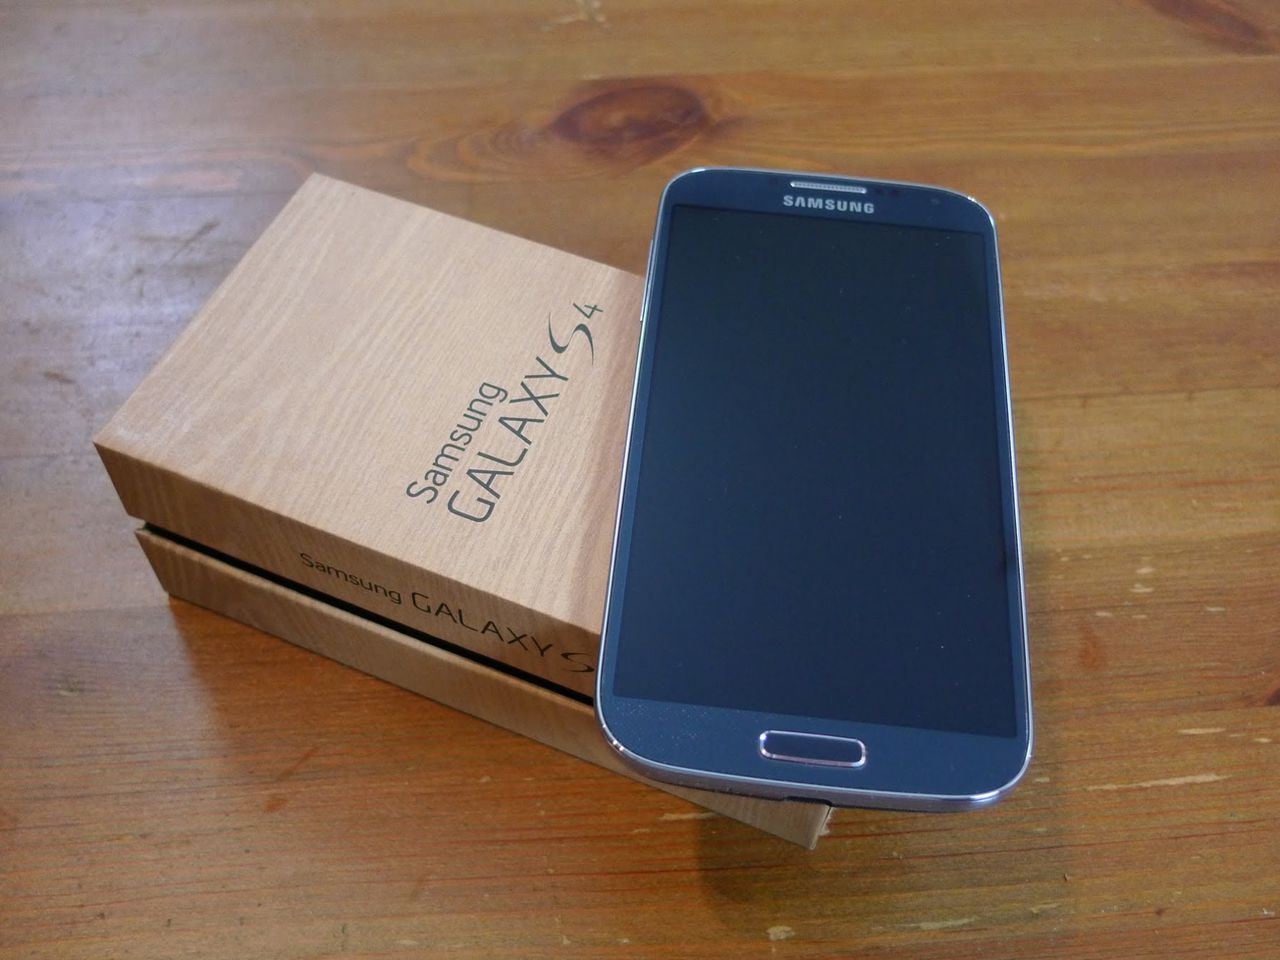 Galaxy s4 купить. Samsung Galaxy s4. Samsung s4 LTE. Самсунг галакси с4 белый. Samsung Galaxy s4 gt-i9500.